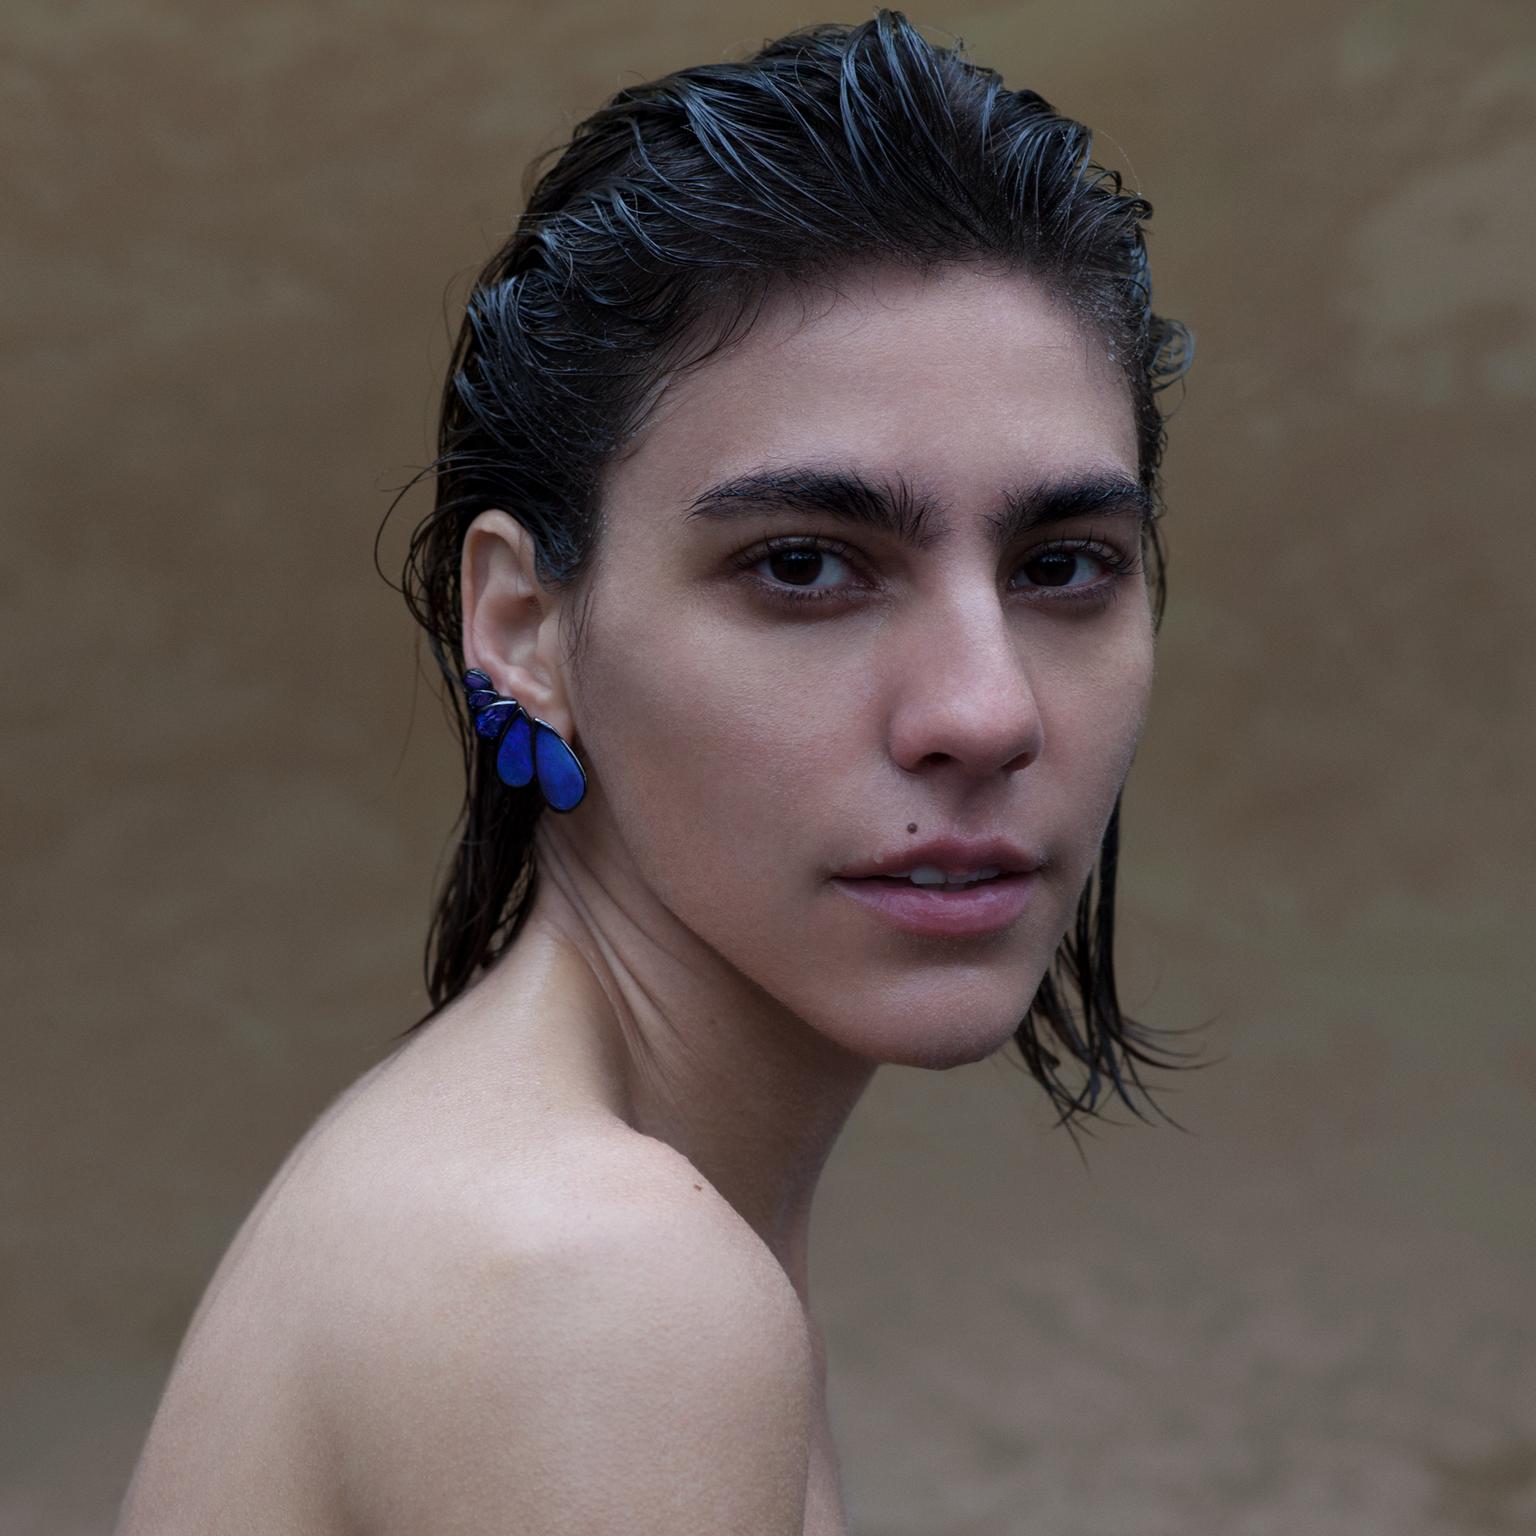 Fernando Jorge opal and diamond earrings on model